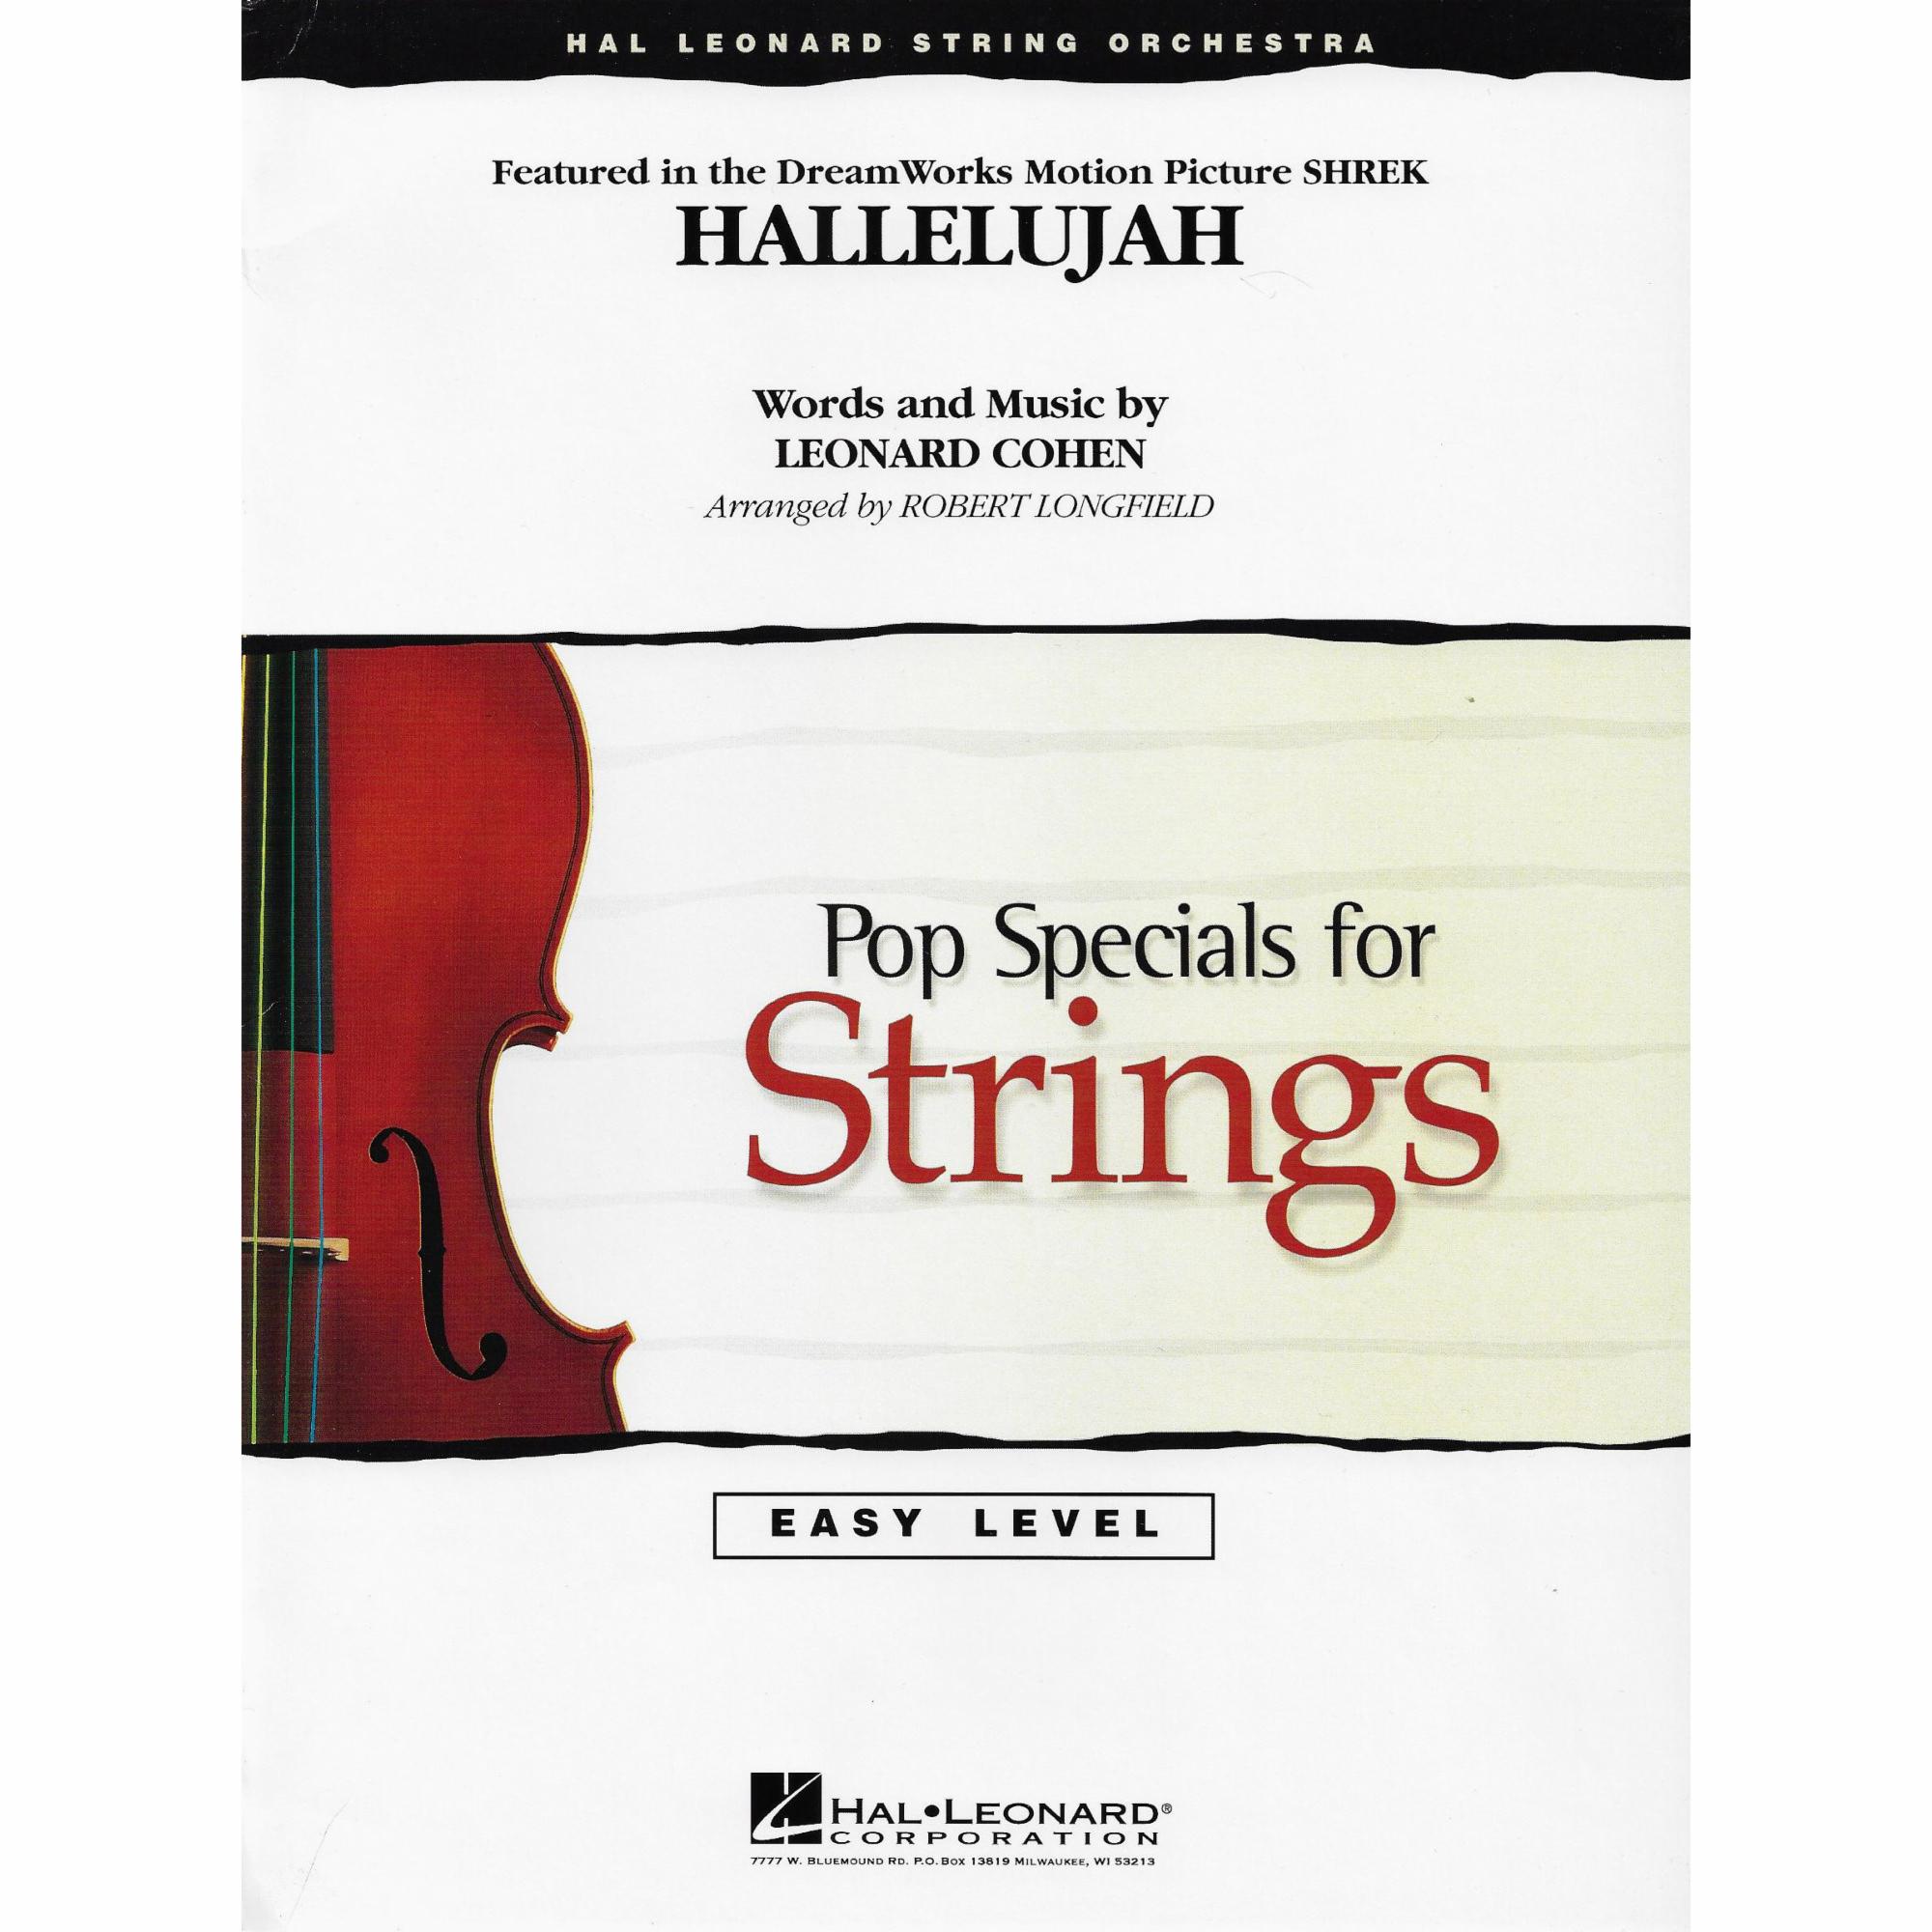 Hallelujah for String Orchestra